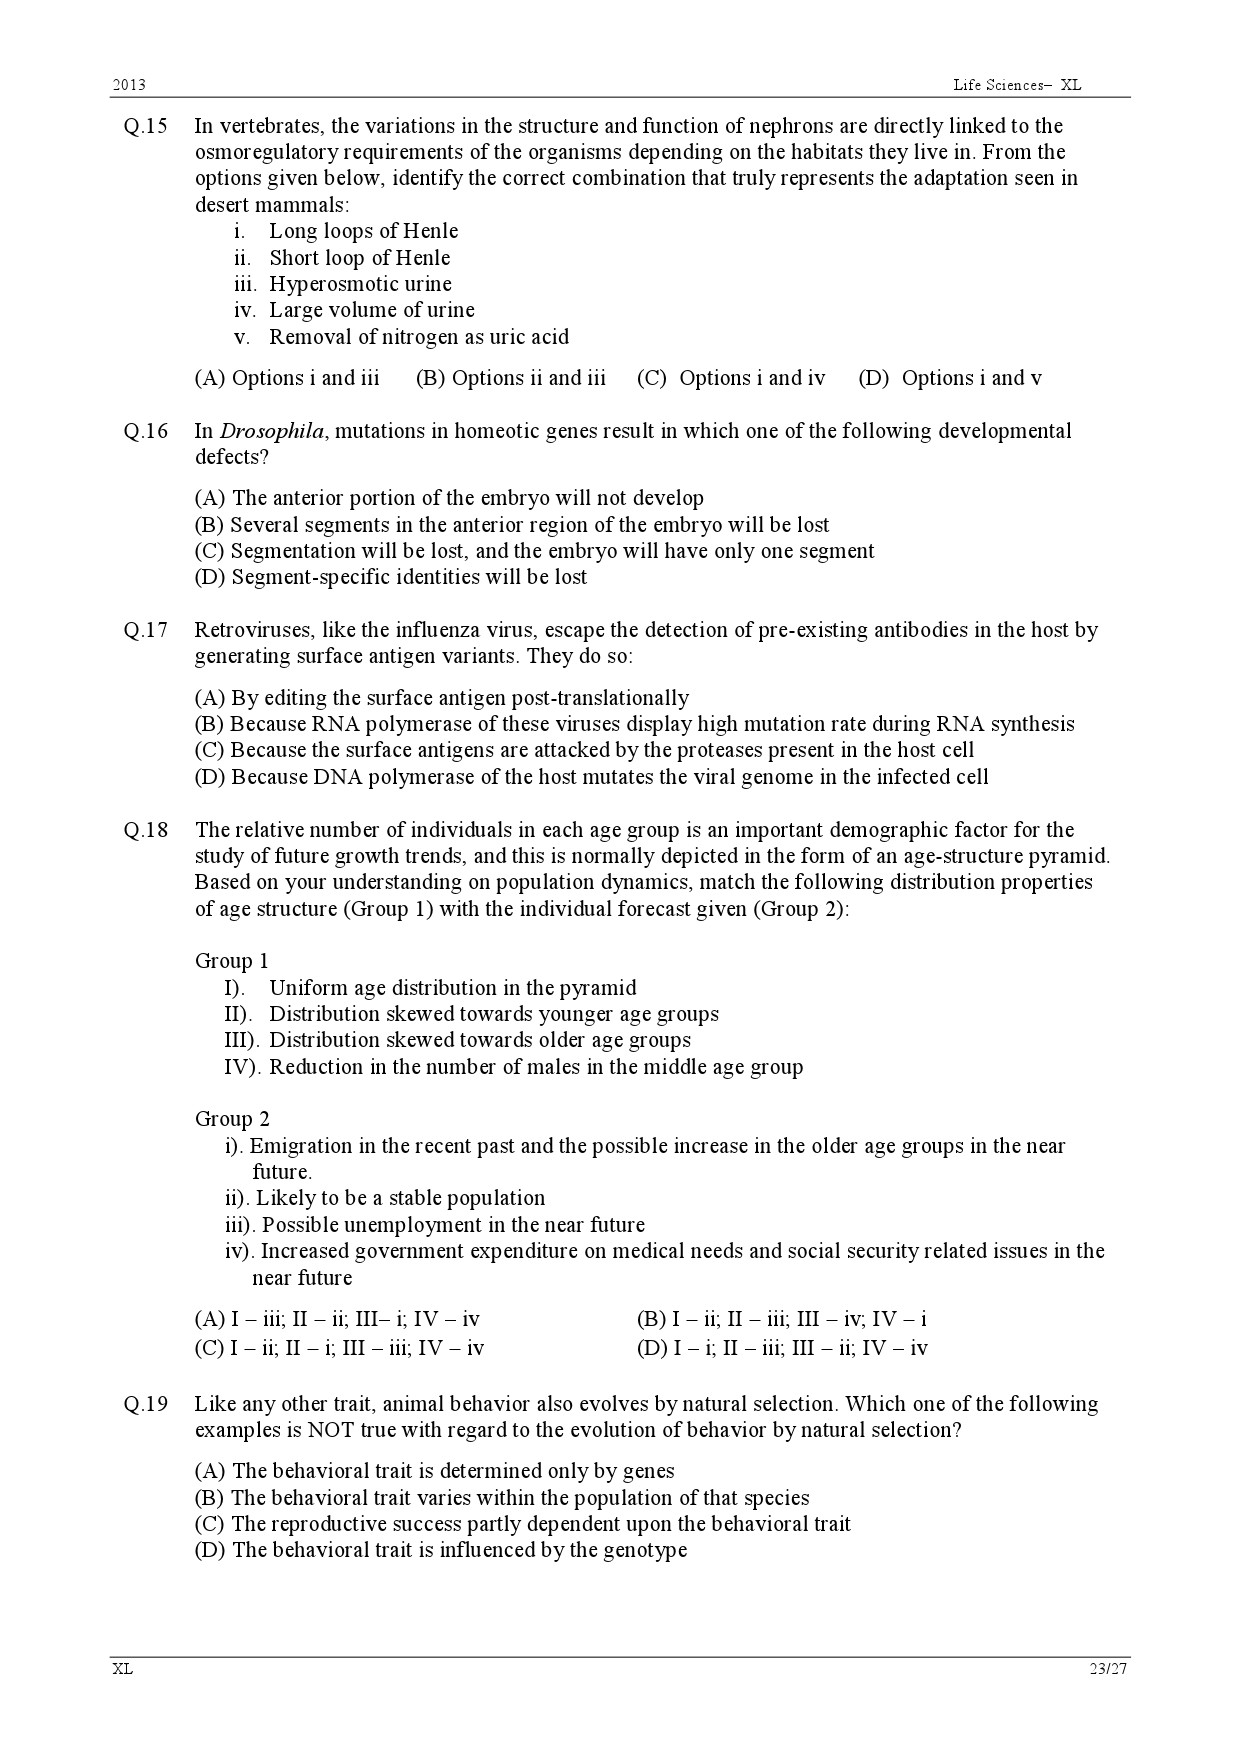 GATE Exam Question Paper 2013 Life Sciences 23